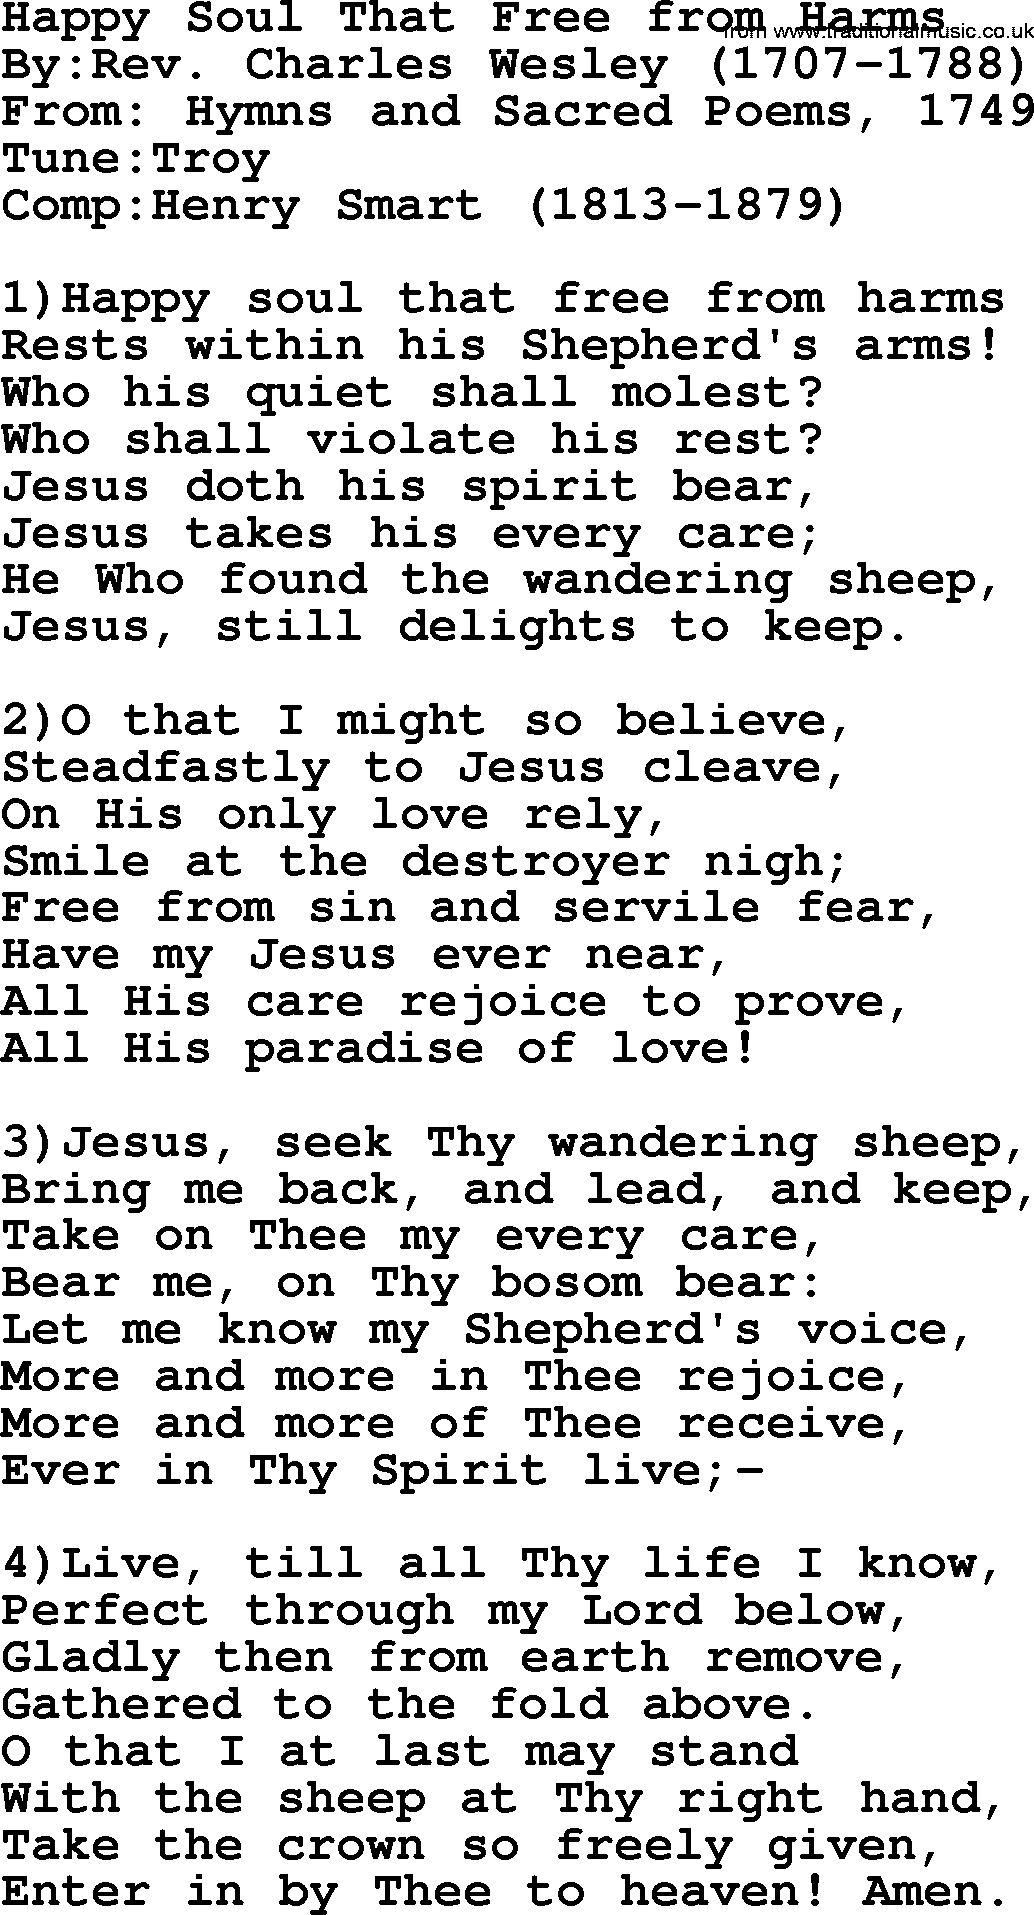 Methodist Hymn: Happy Soul That Free From Harms, lyrics